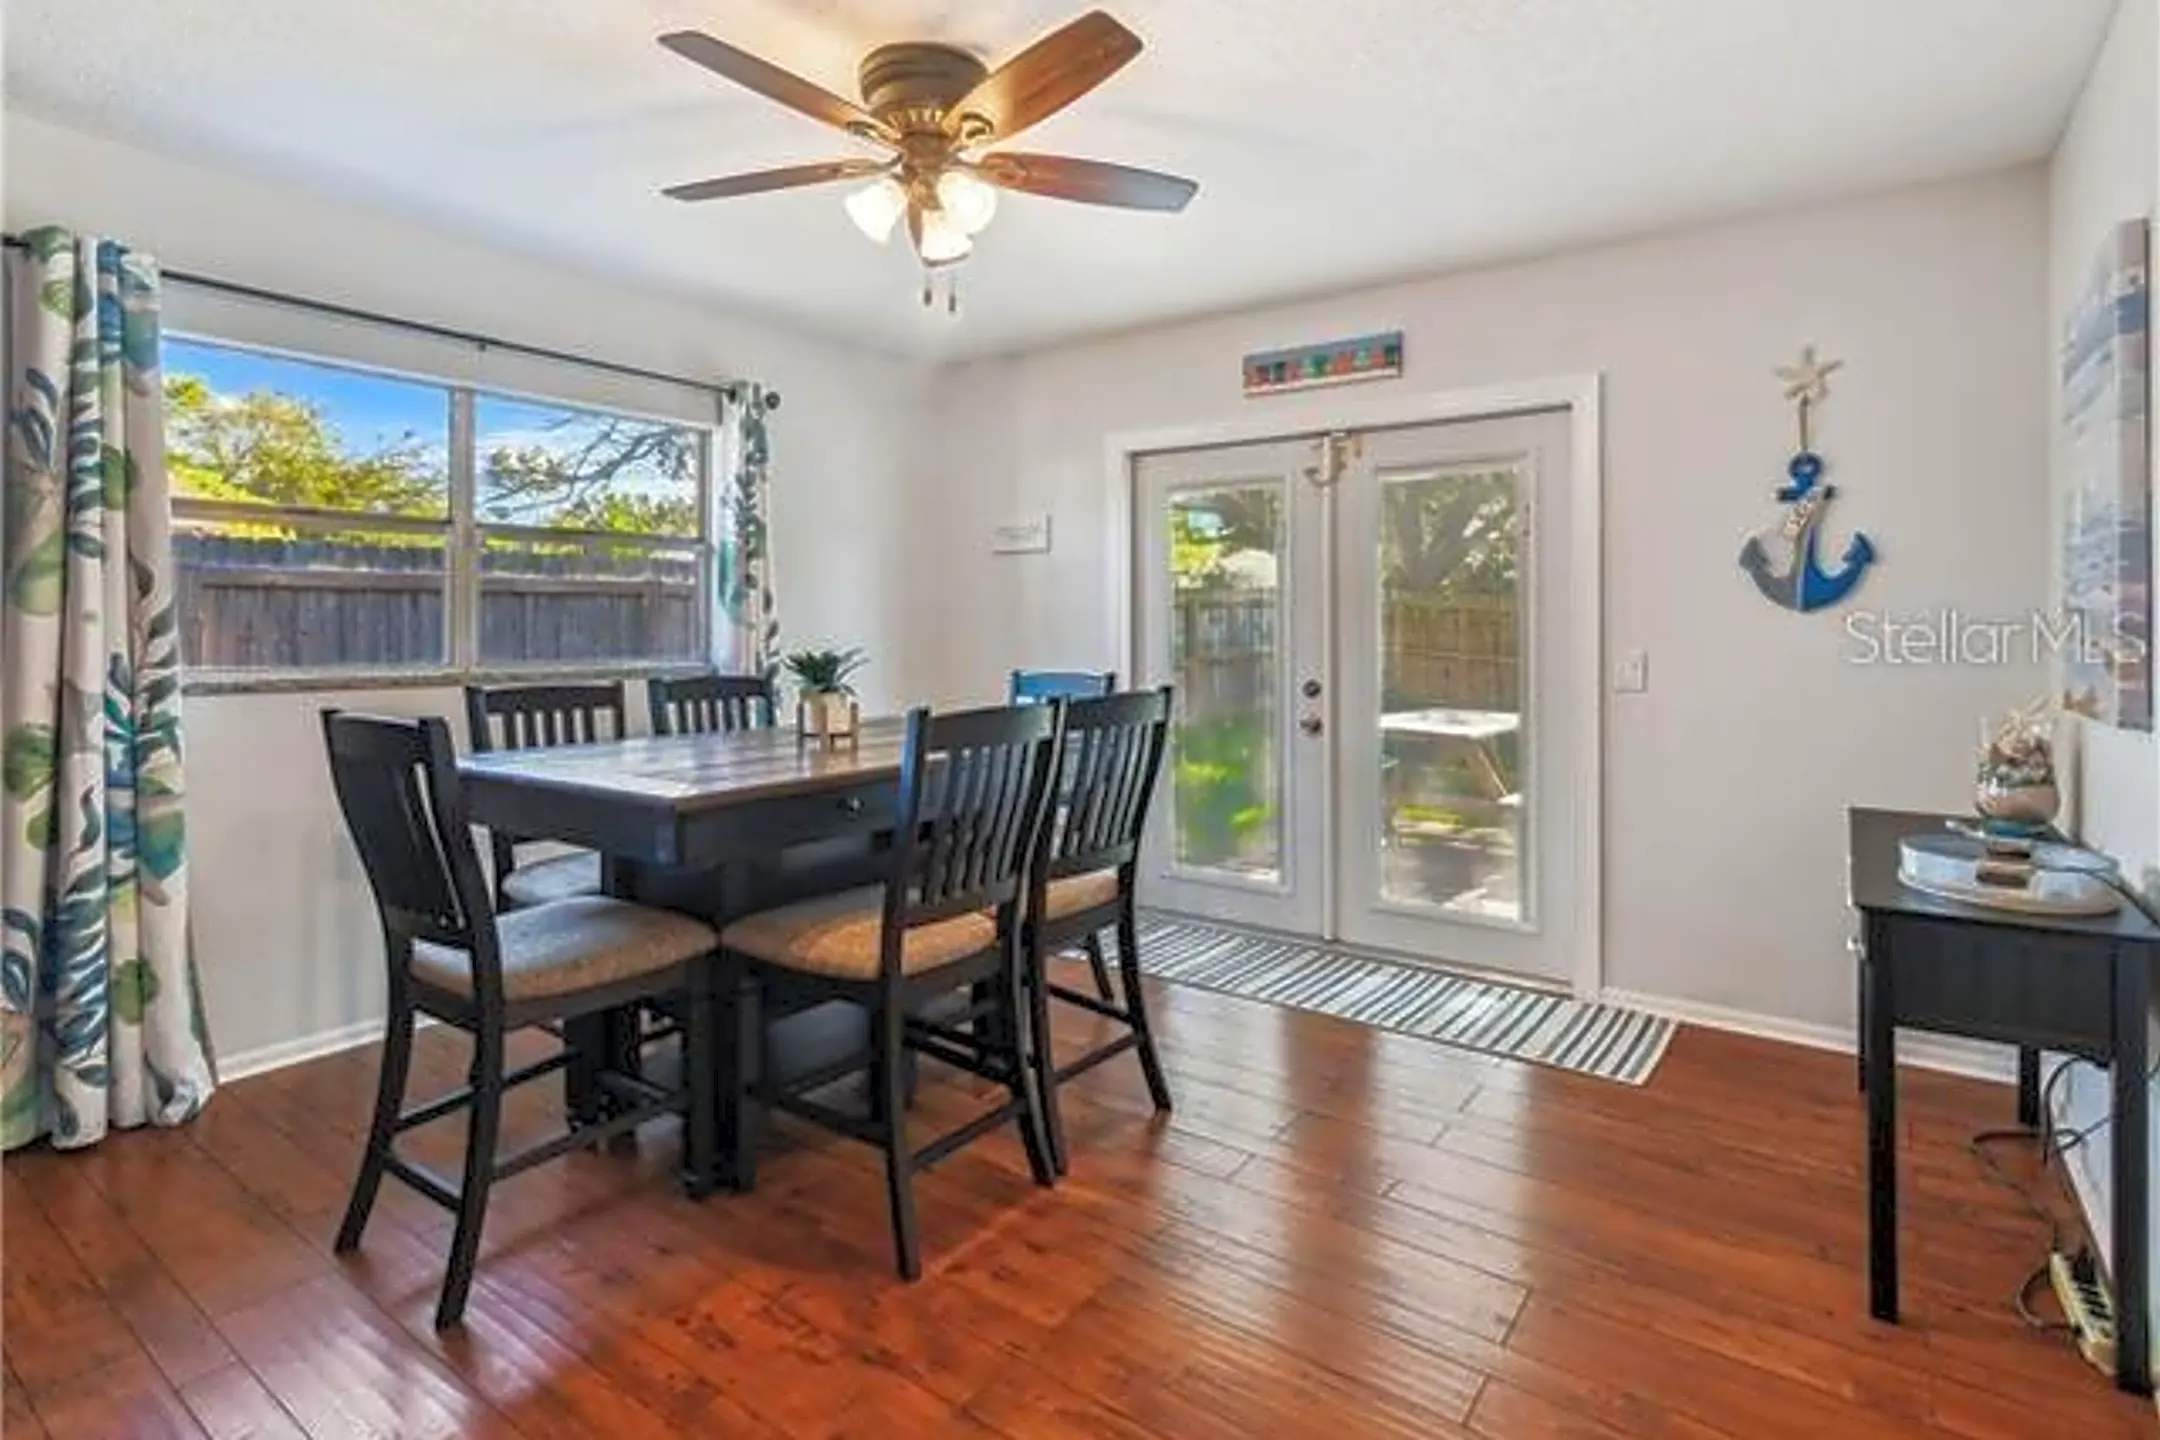 Dining Room - 1510 Illinois Ave - Palm Harbor, FL